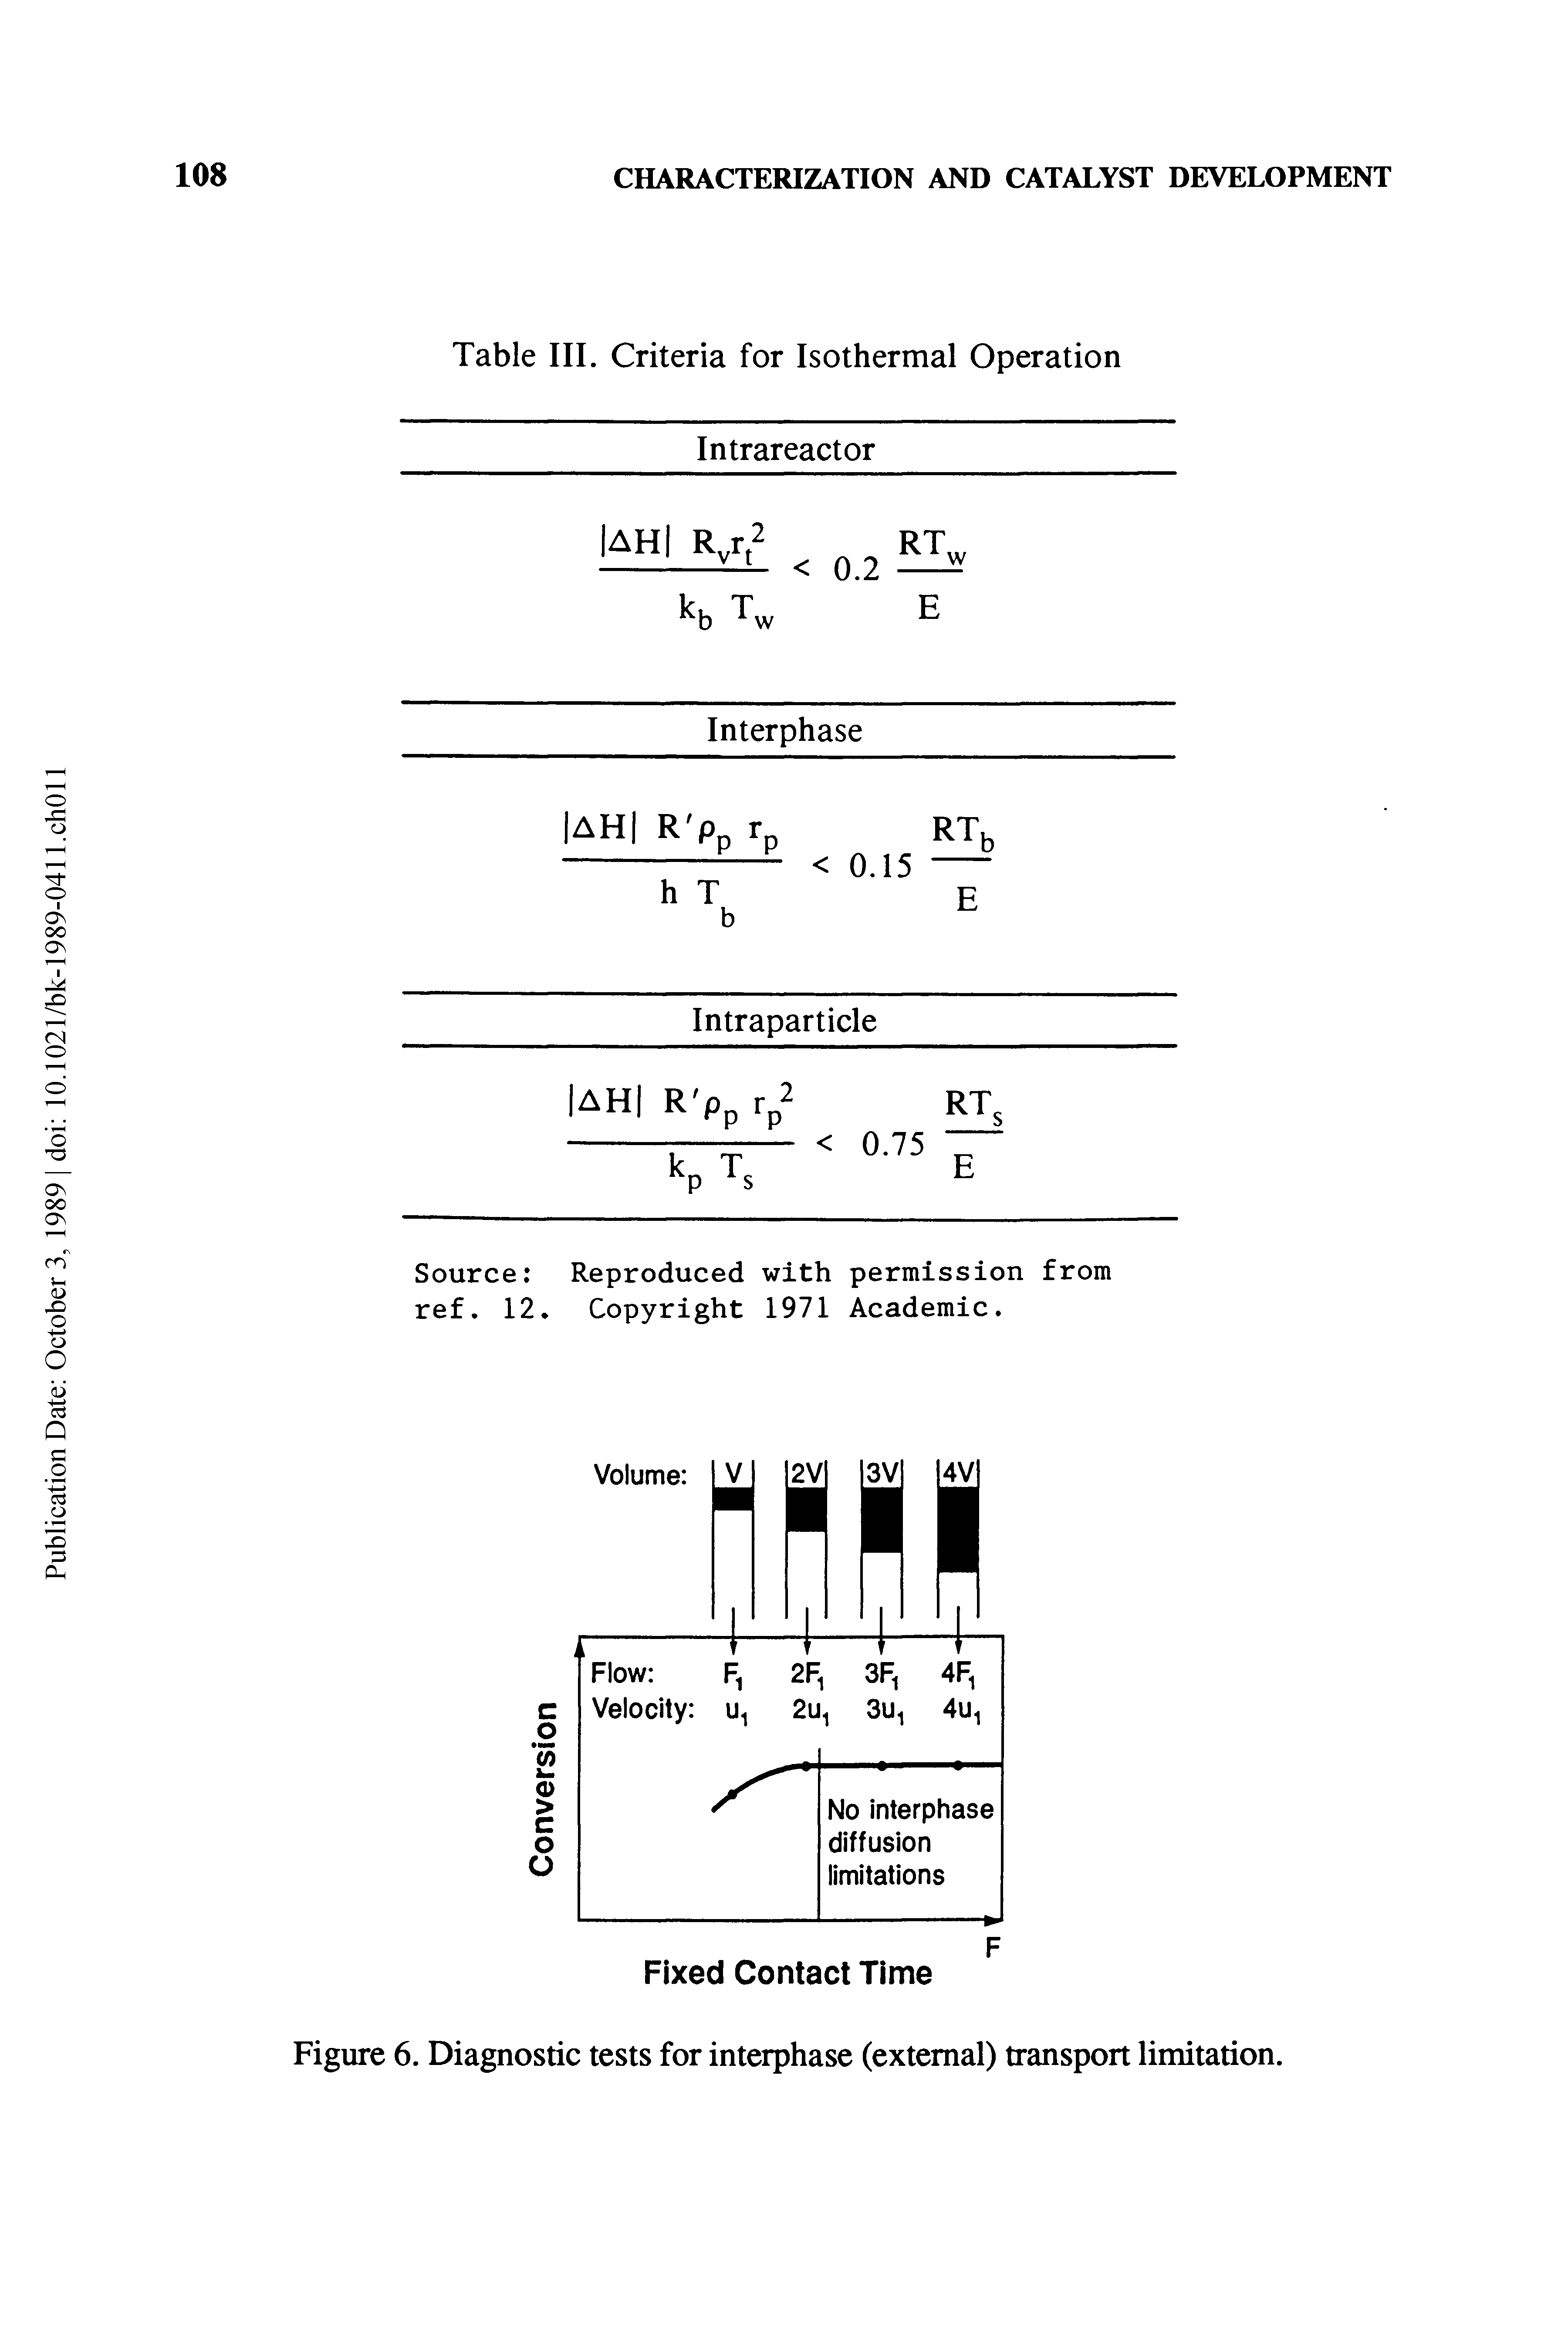 Figure 6. Diagnostic tests for interphase (external) transport limitation.